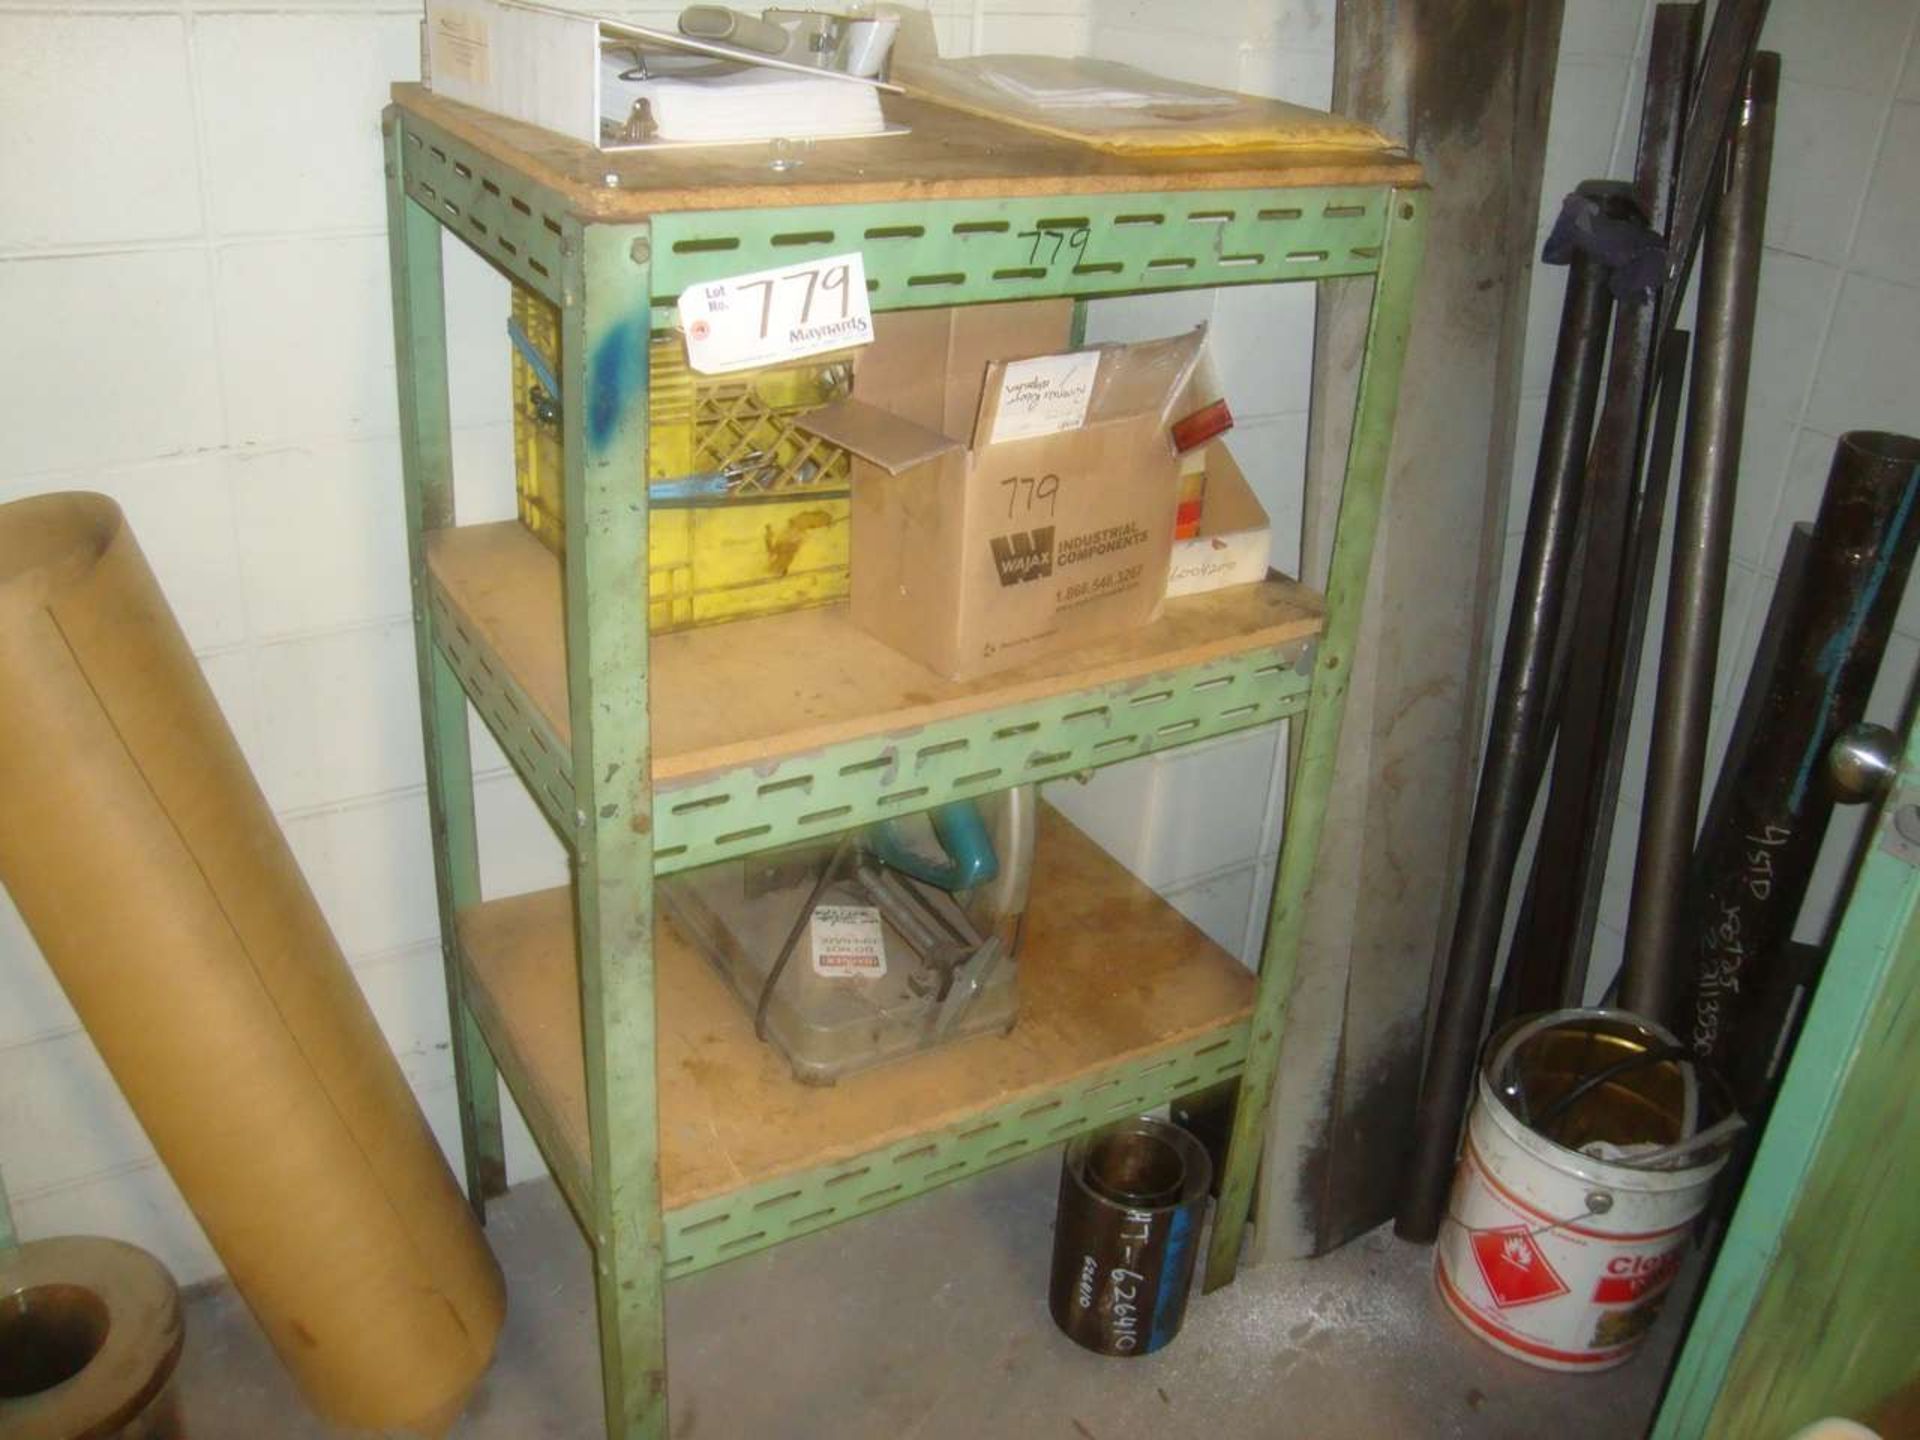 Shelf contents and steel in corner